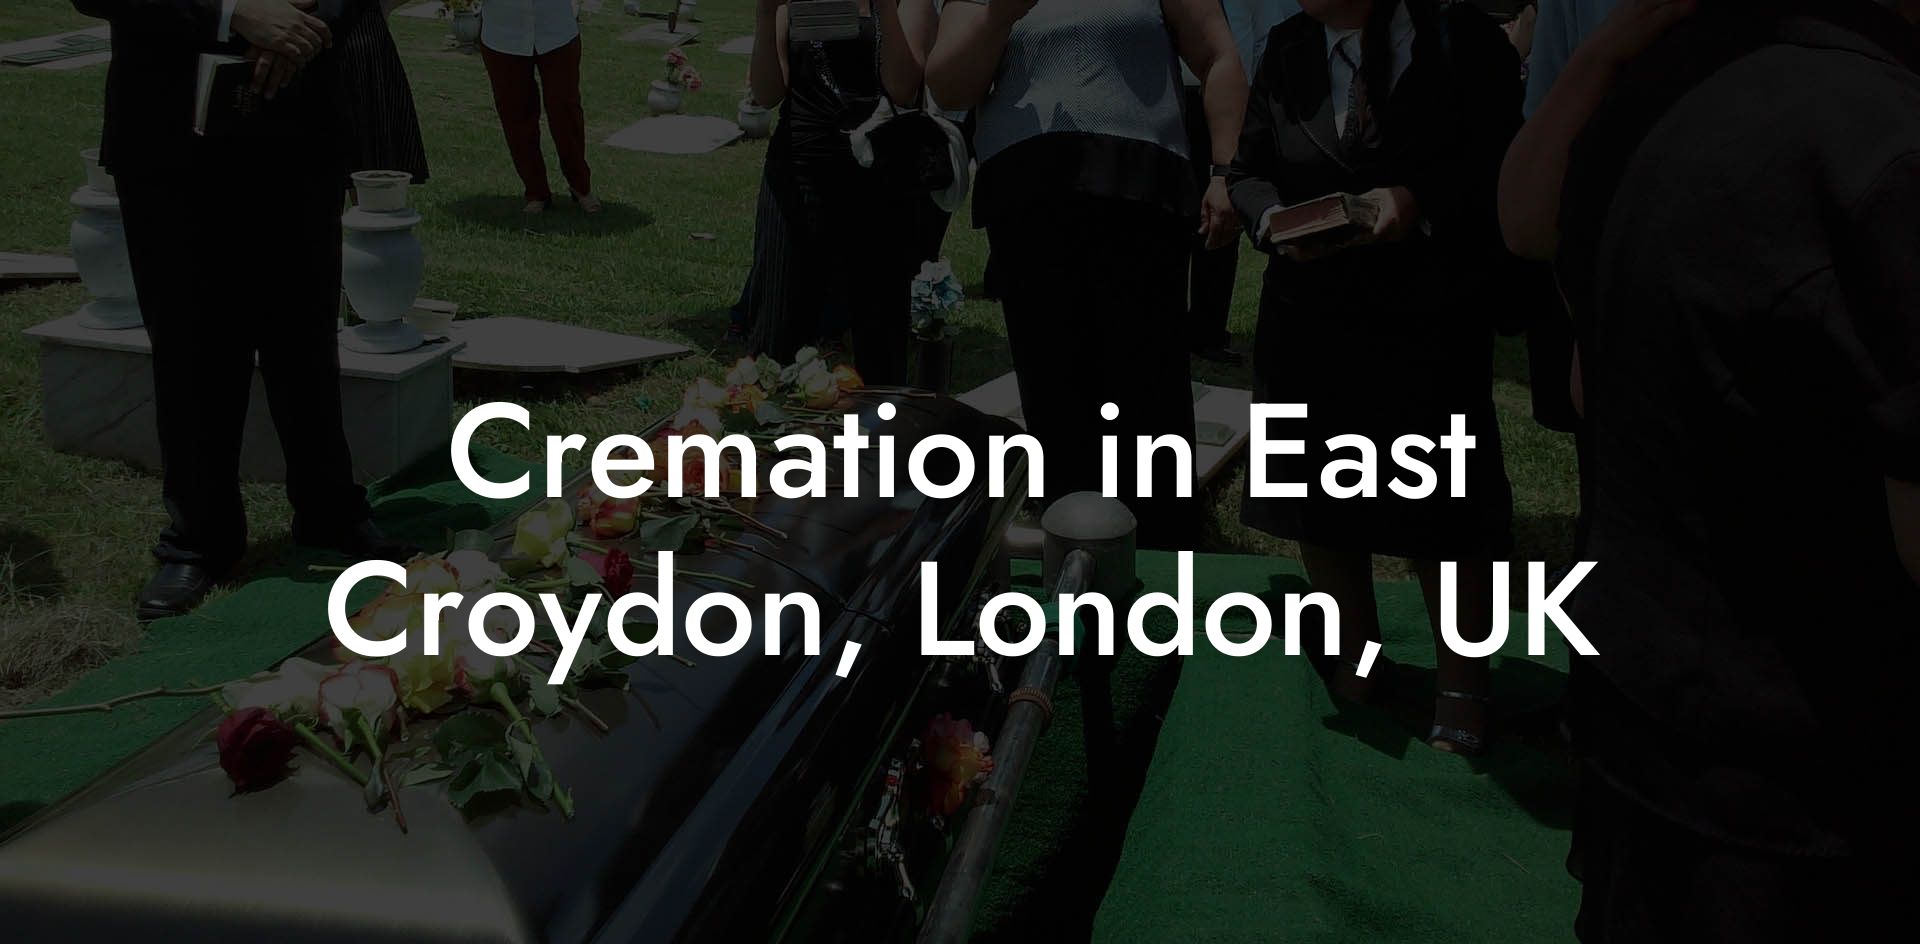 Cremation in East Croydon, London, UK